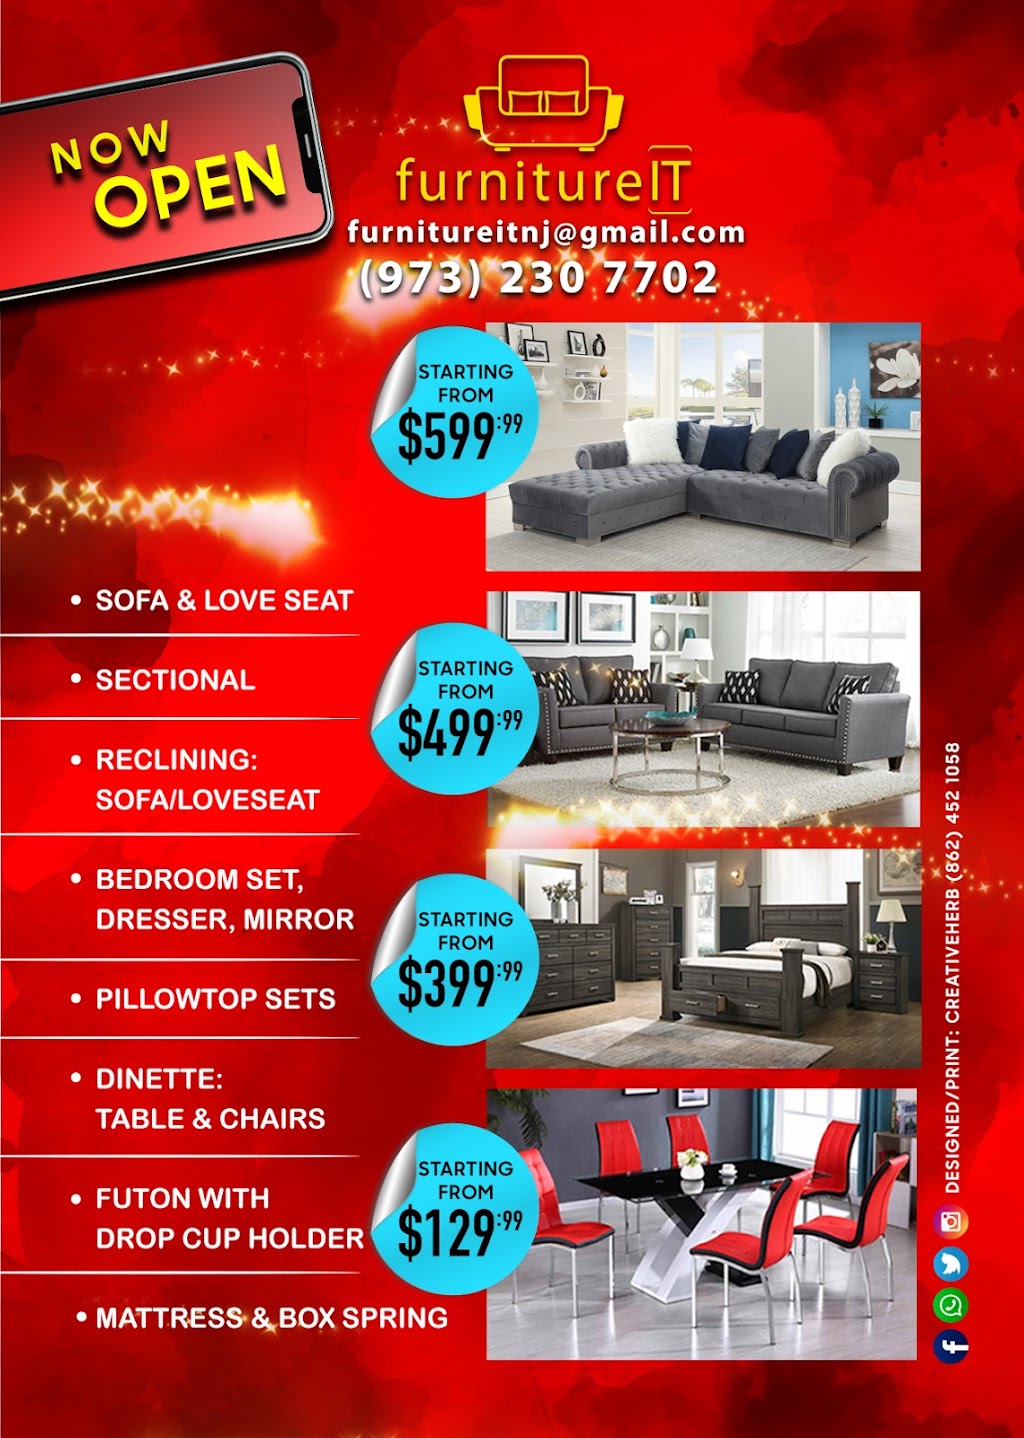 Furniture IT | 548 Springfield Ave, Newark, NJ 07103 | Phone: (973) 230-7702